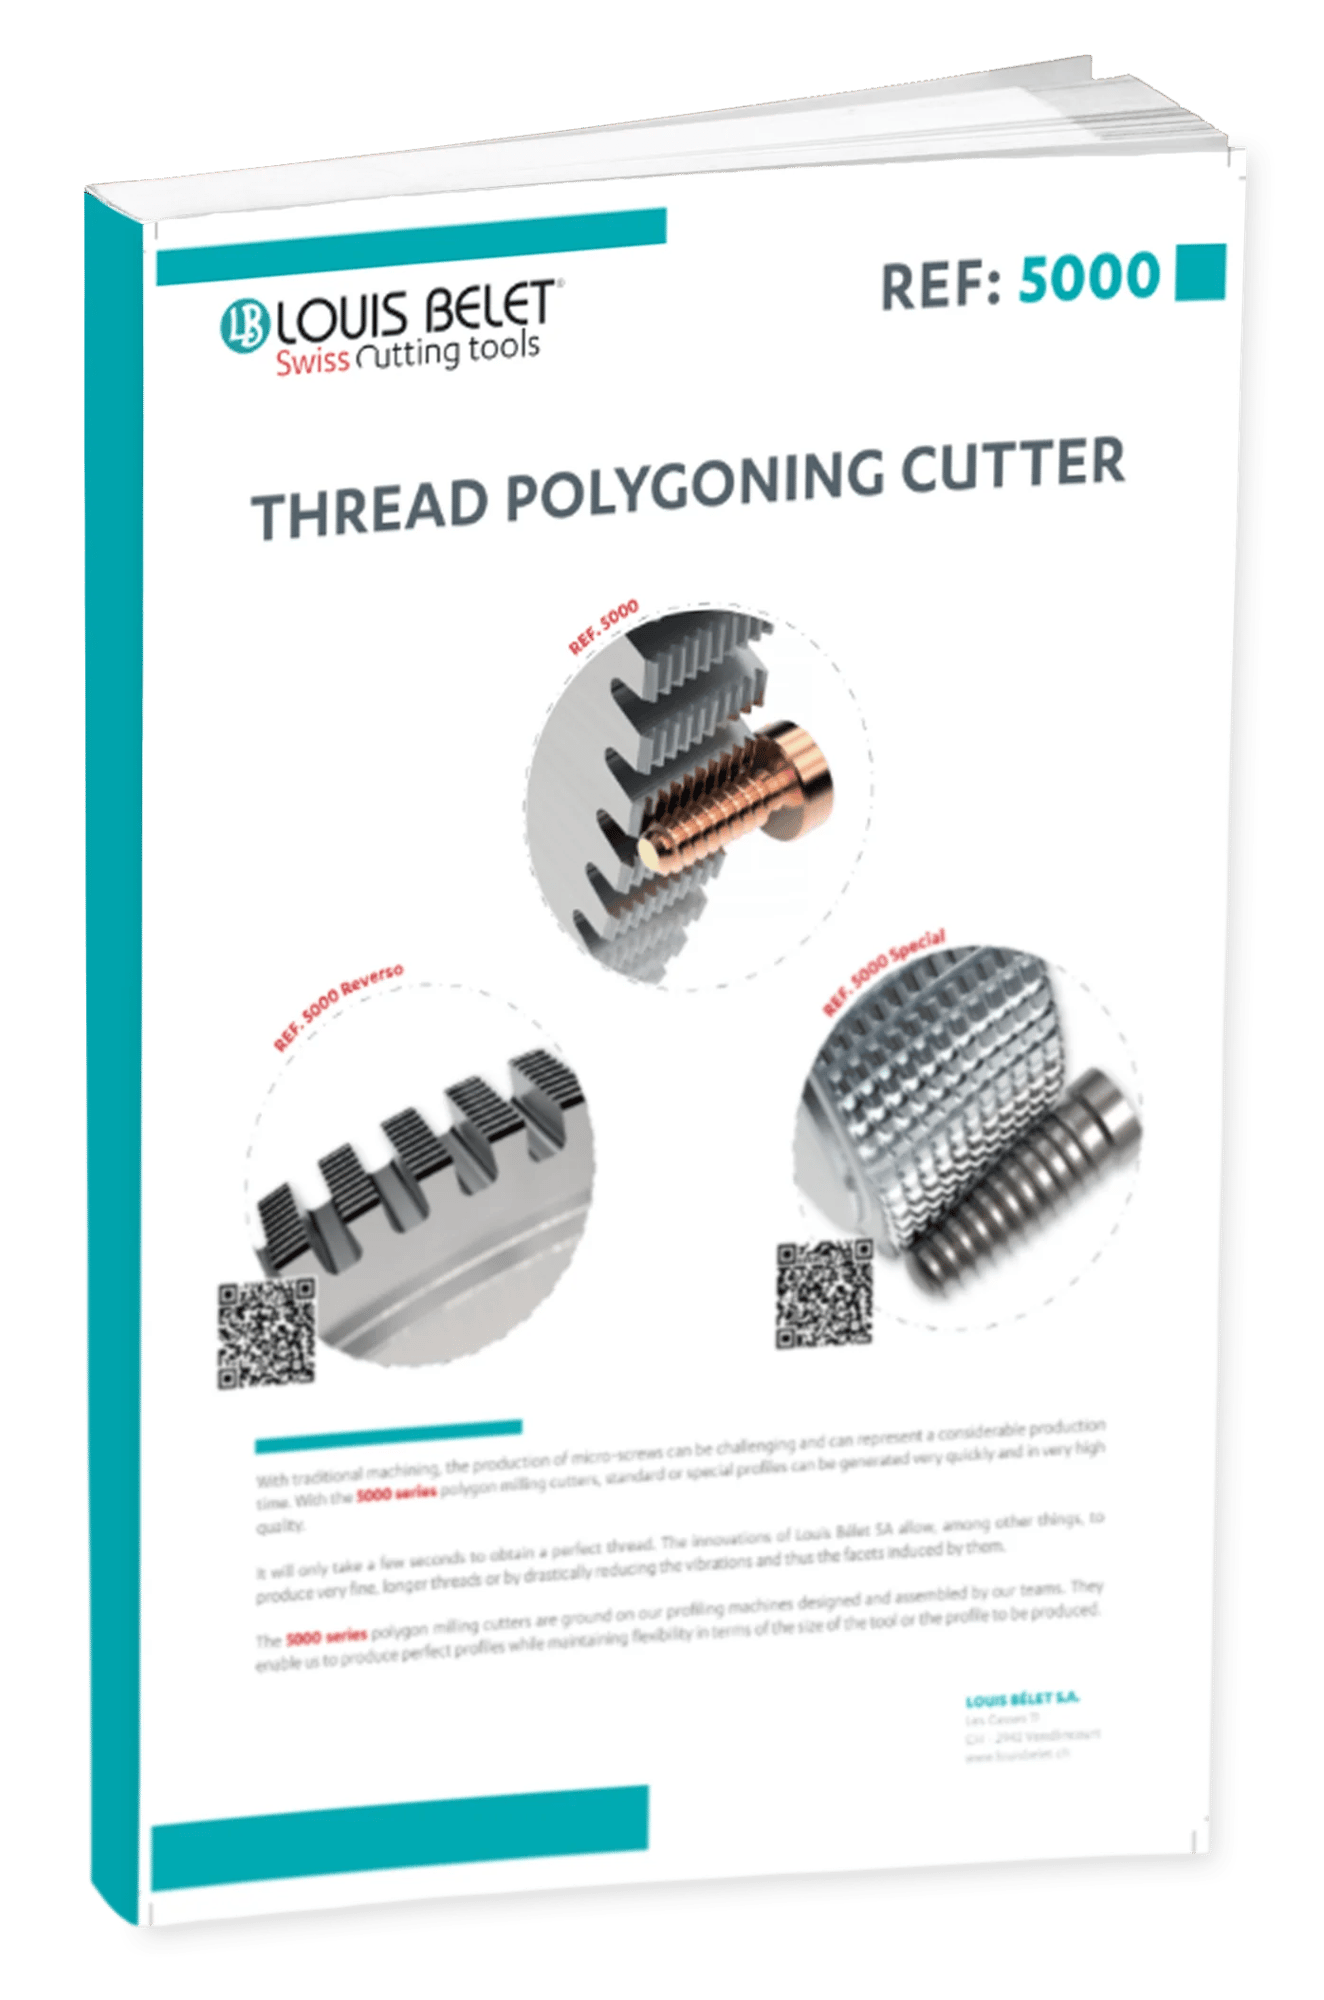 13. Louis Belet Brochure Thread Polygoning Cutter 5000